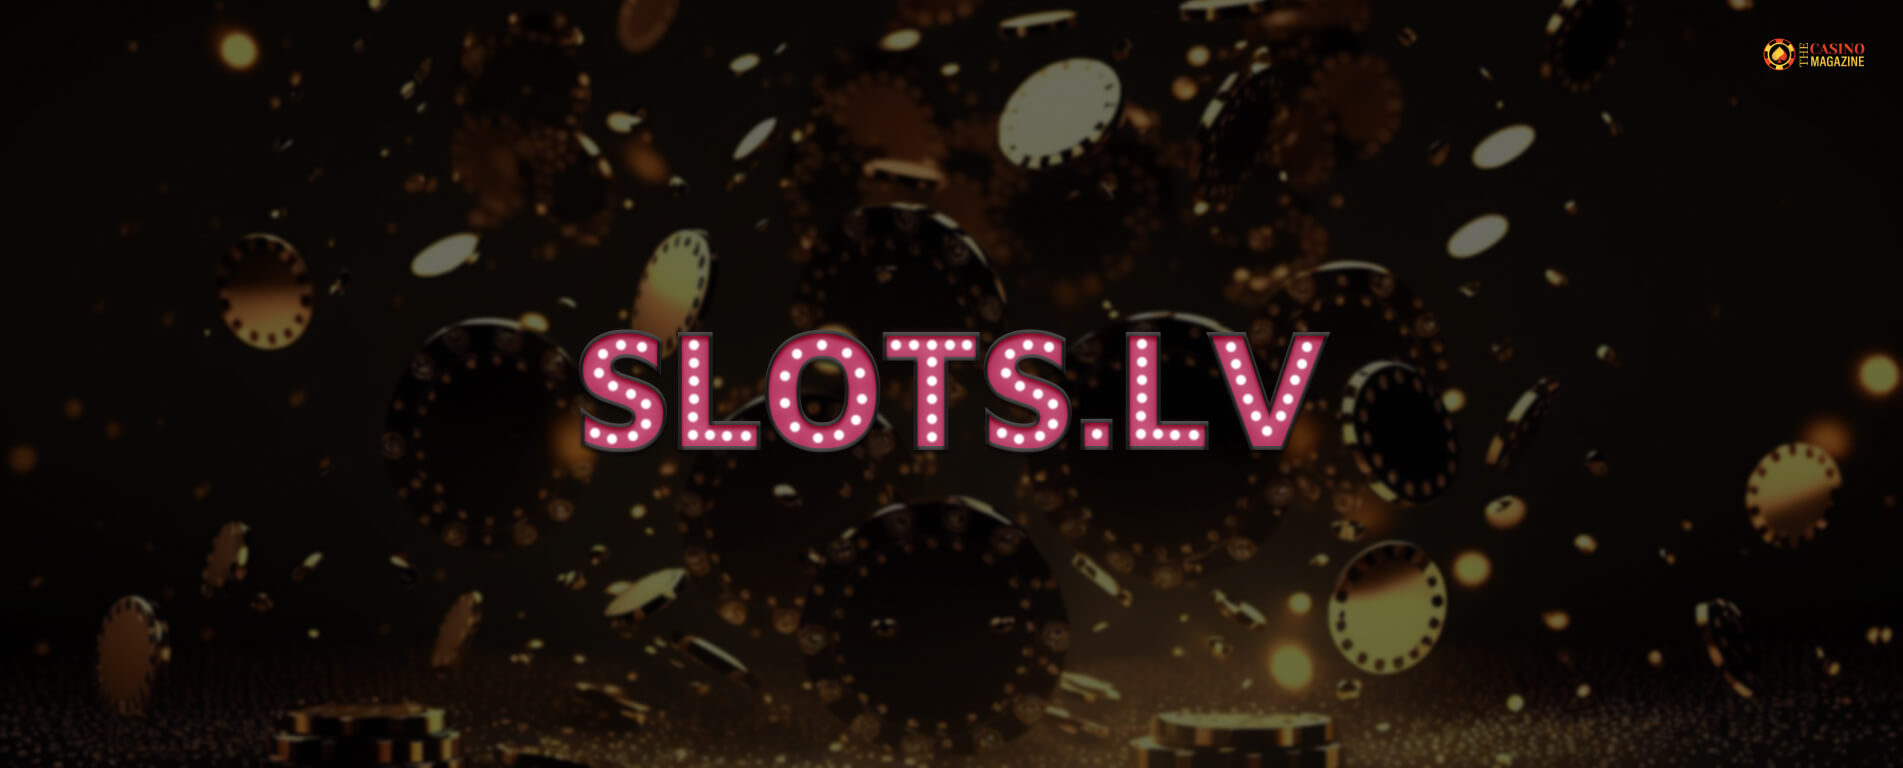 Slots.lv Review: Is it Still A Legit Casino in 2023?